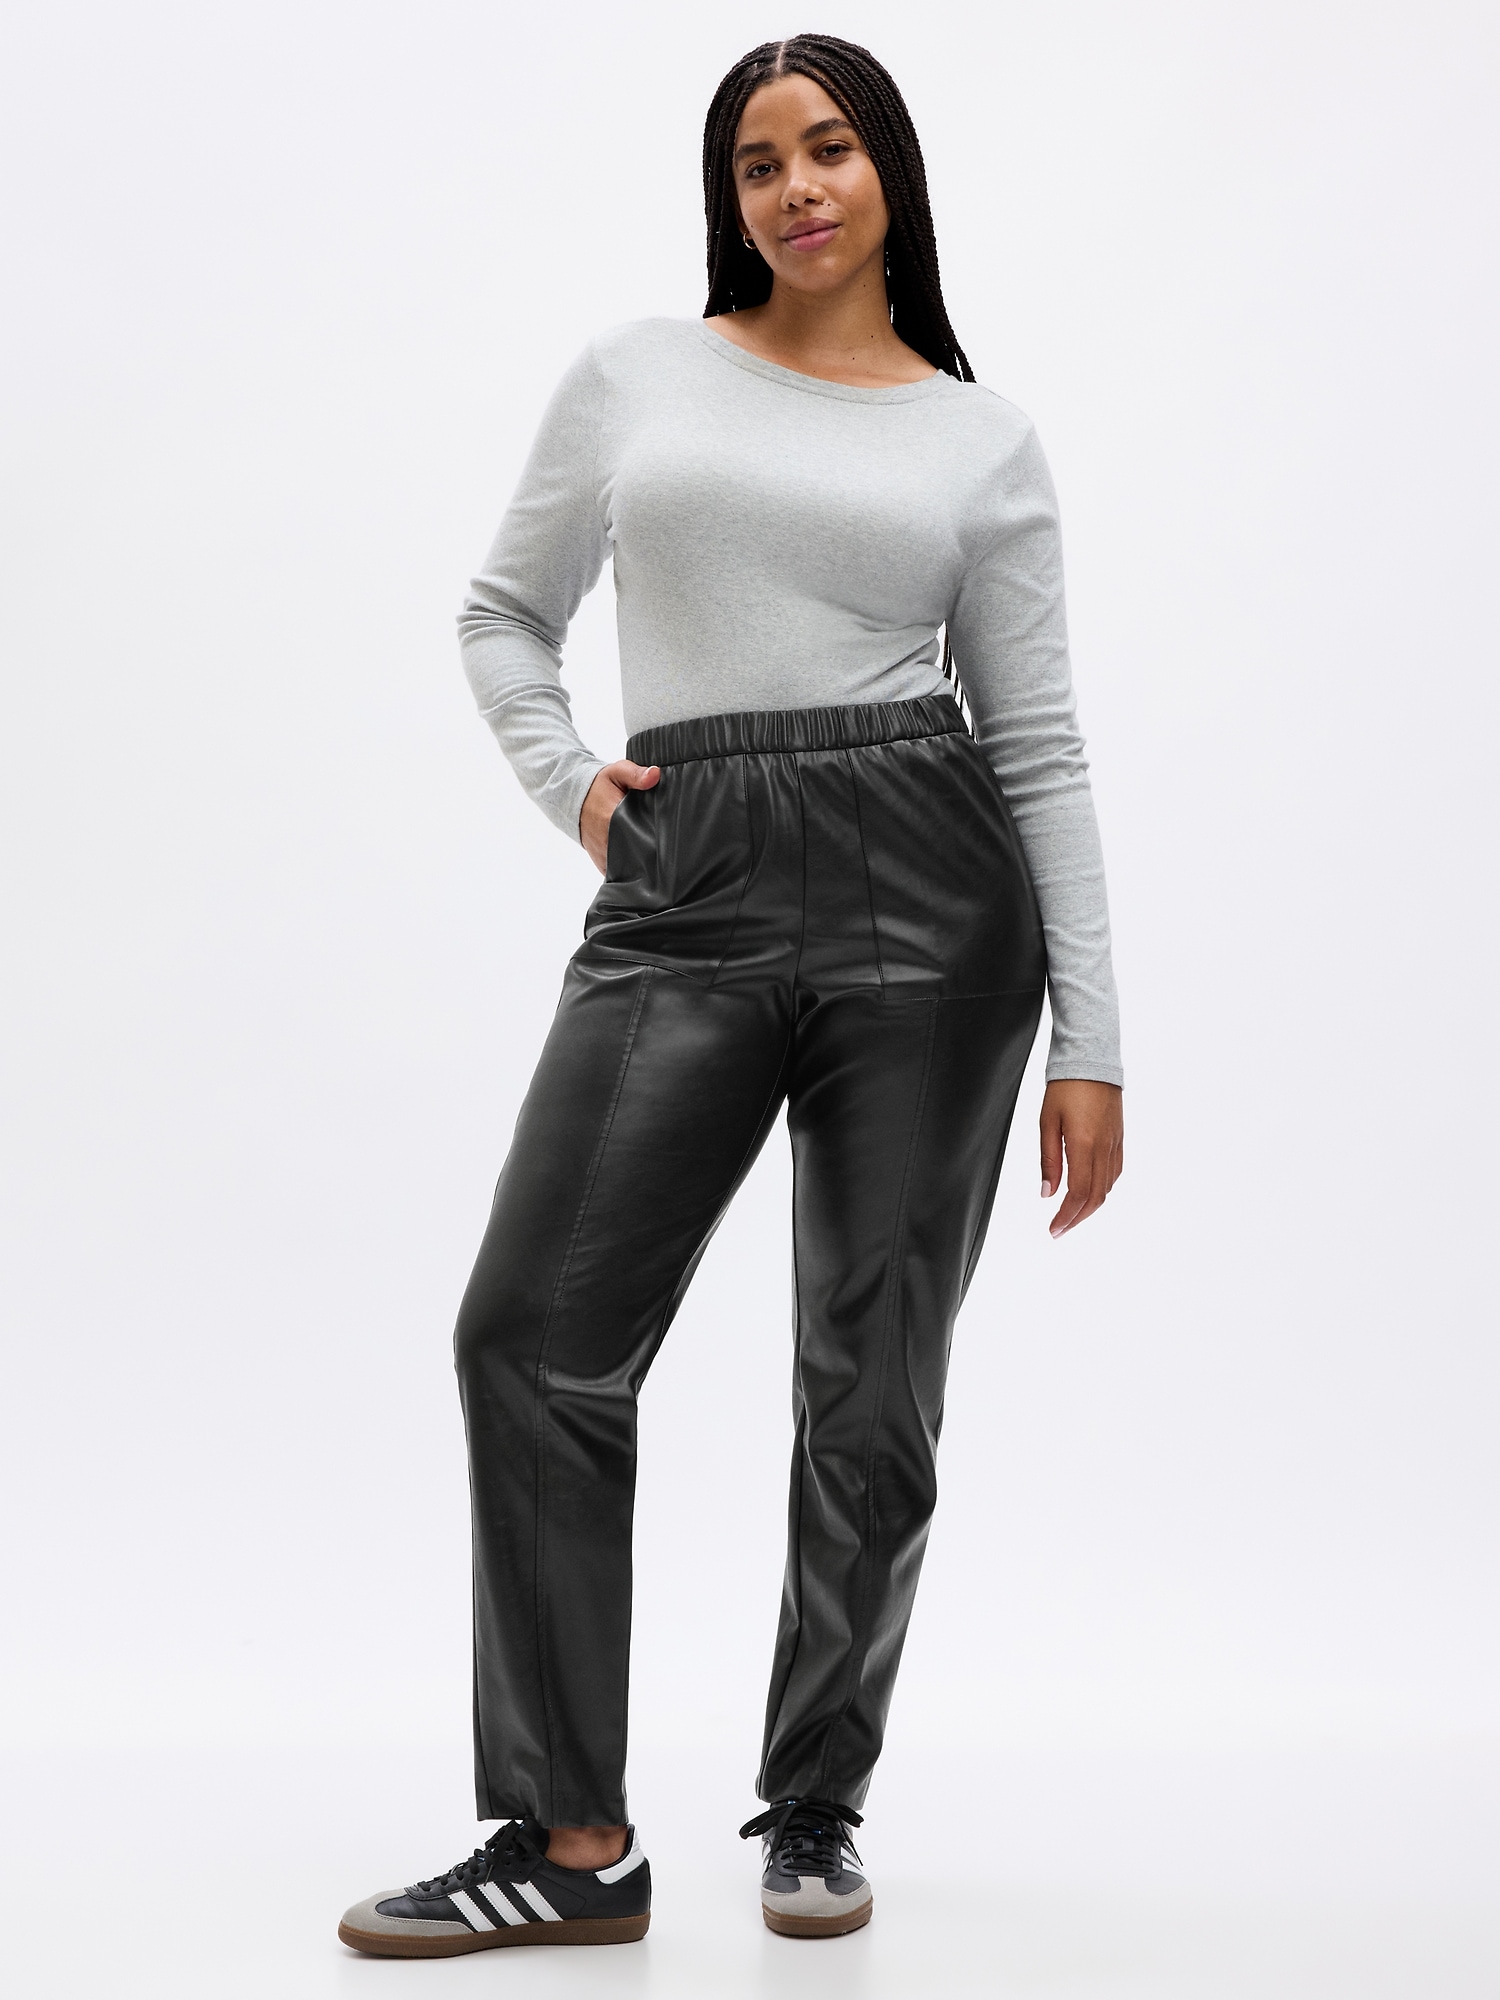 WAYRUNZ Womens High Waisted Stretch Faux Leather Pants PU coated